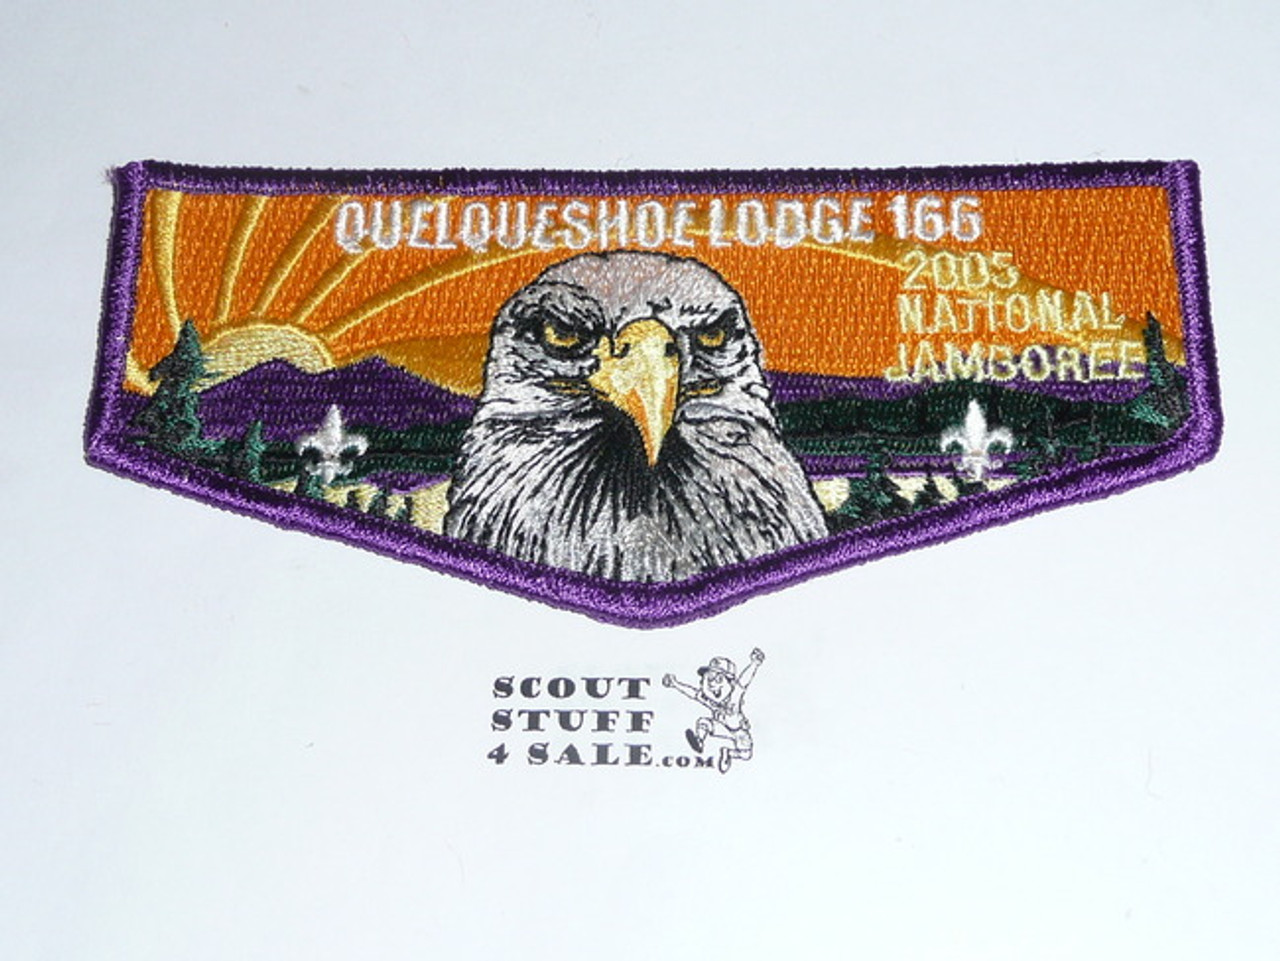 Order of the Arrow Lodge #166 Quelqueshoe s75 2005 National Jamboree Flap Patch